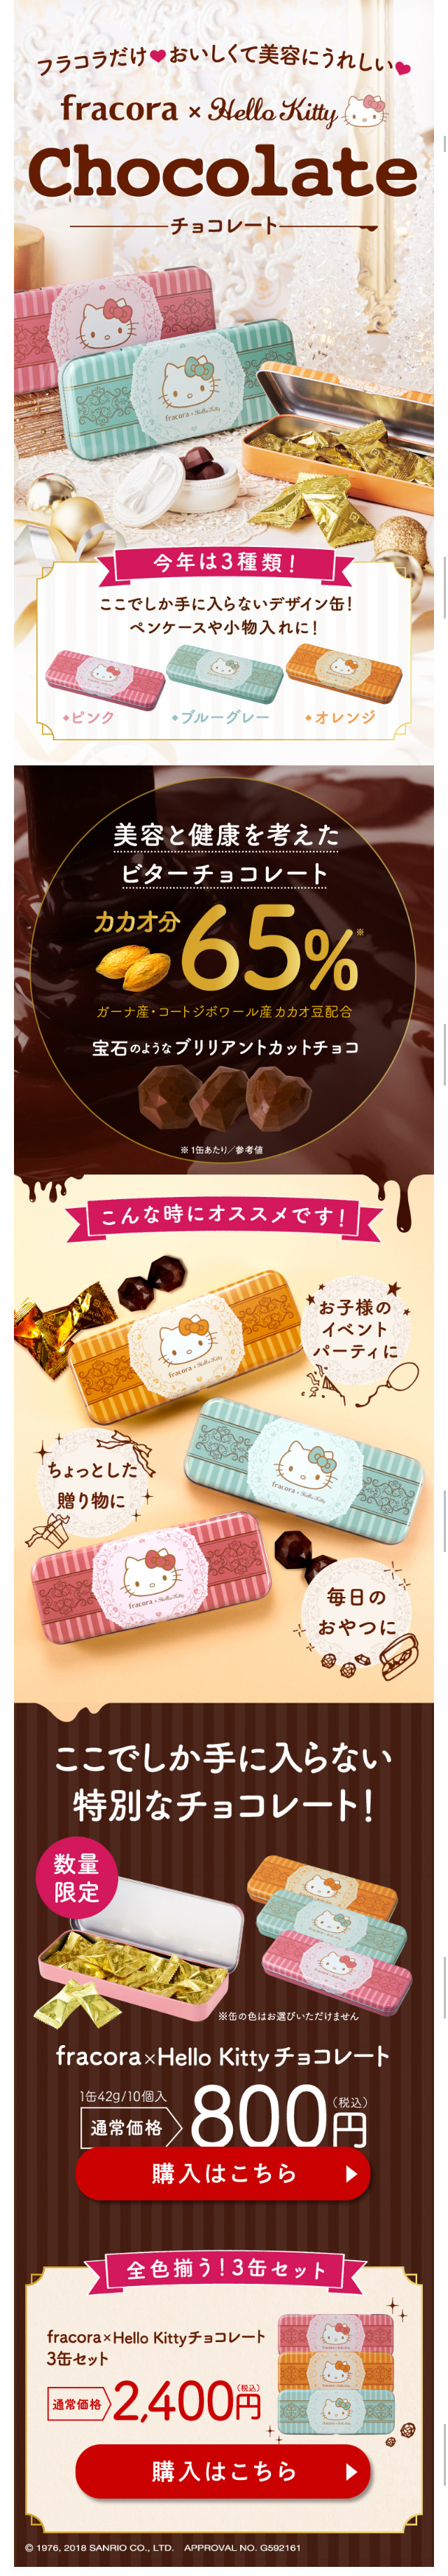 fracora × Hello Kitty チョコレート 3色セット_sp_1